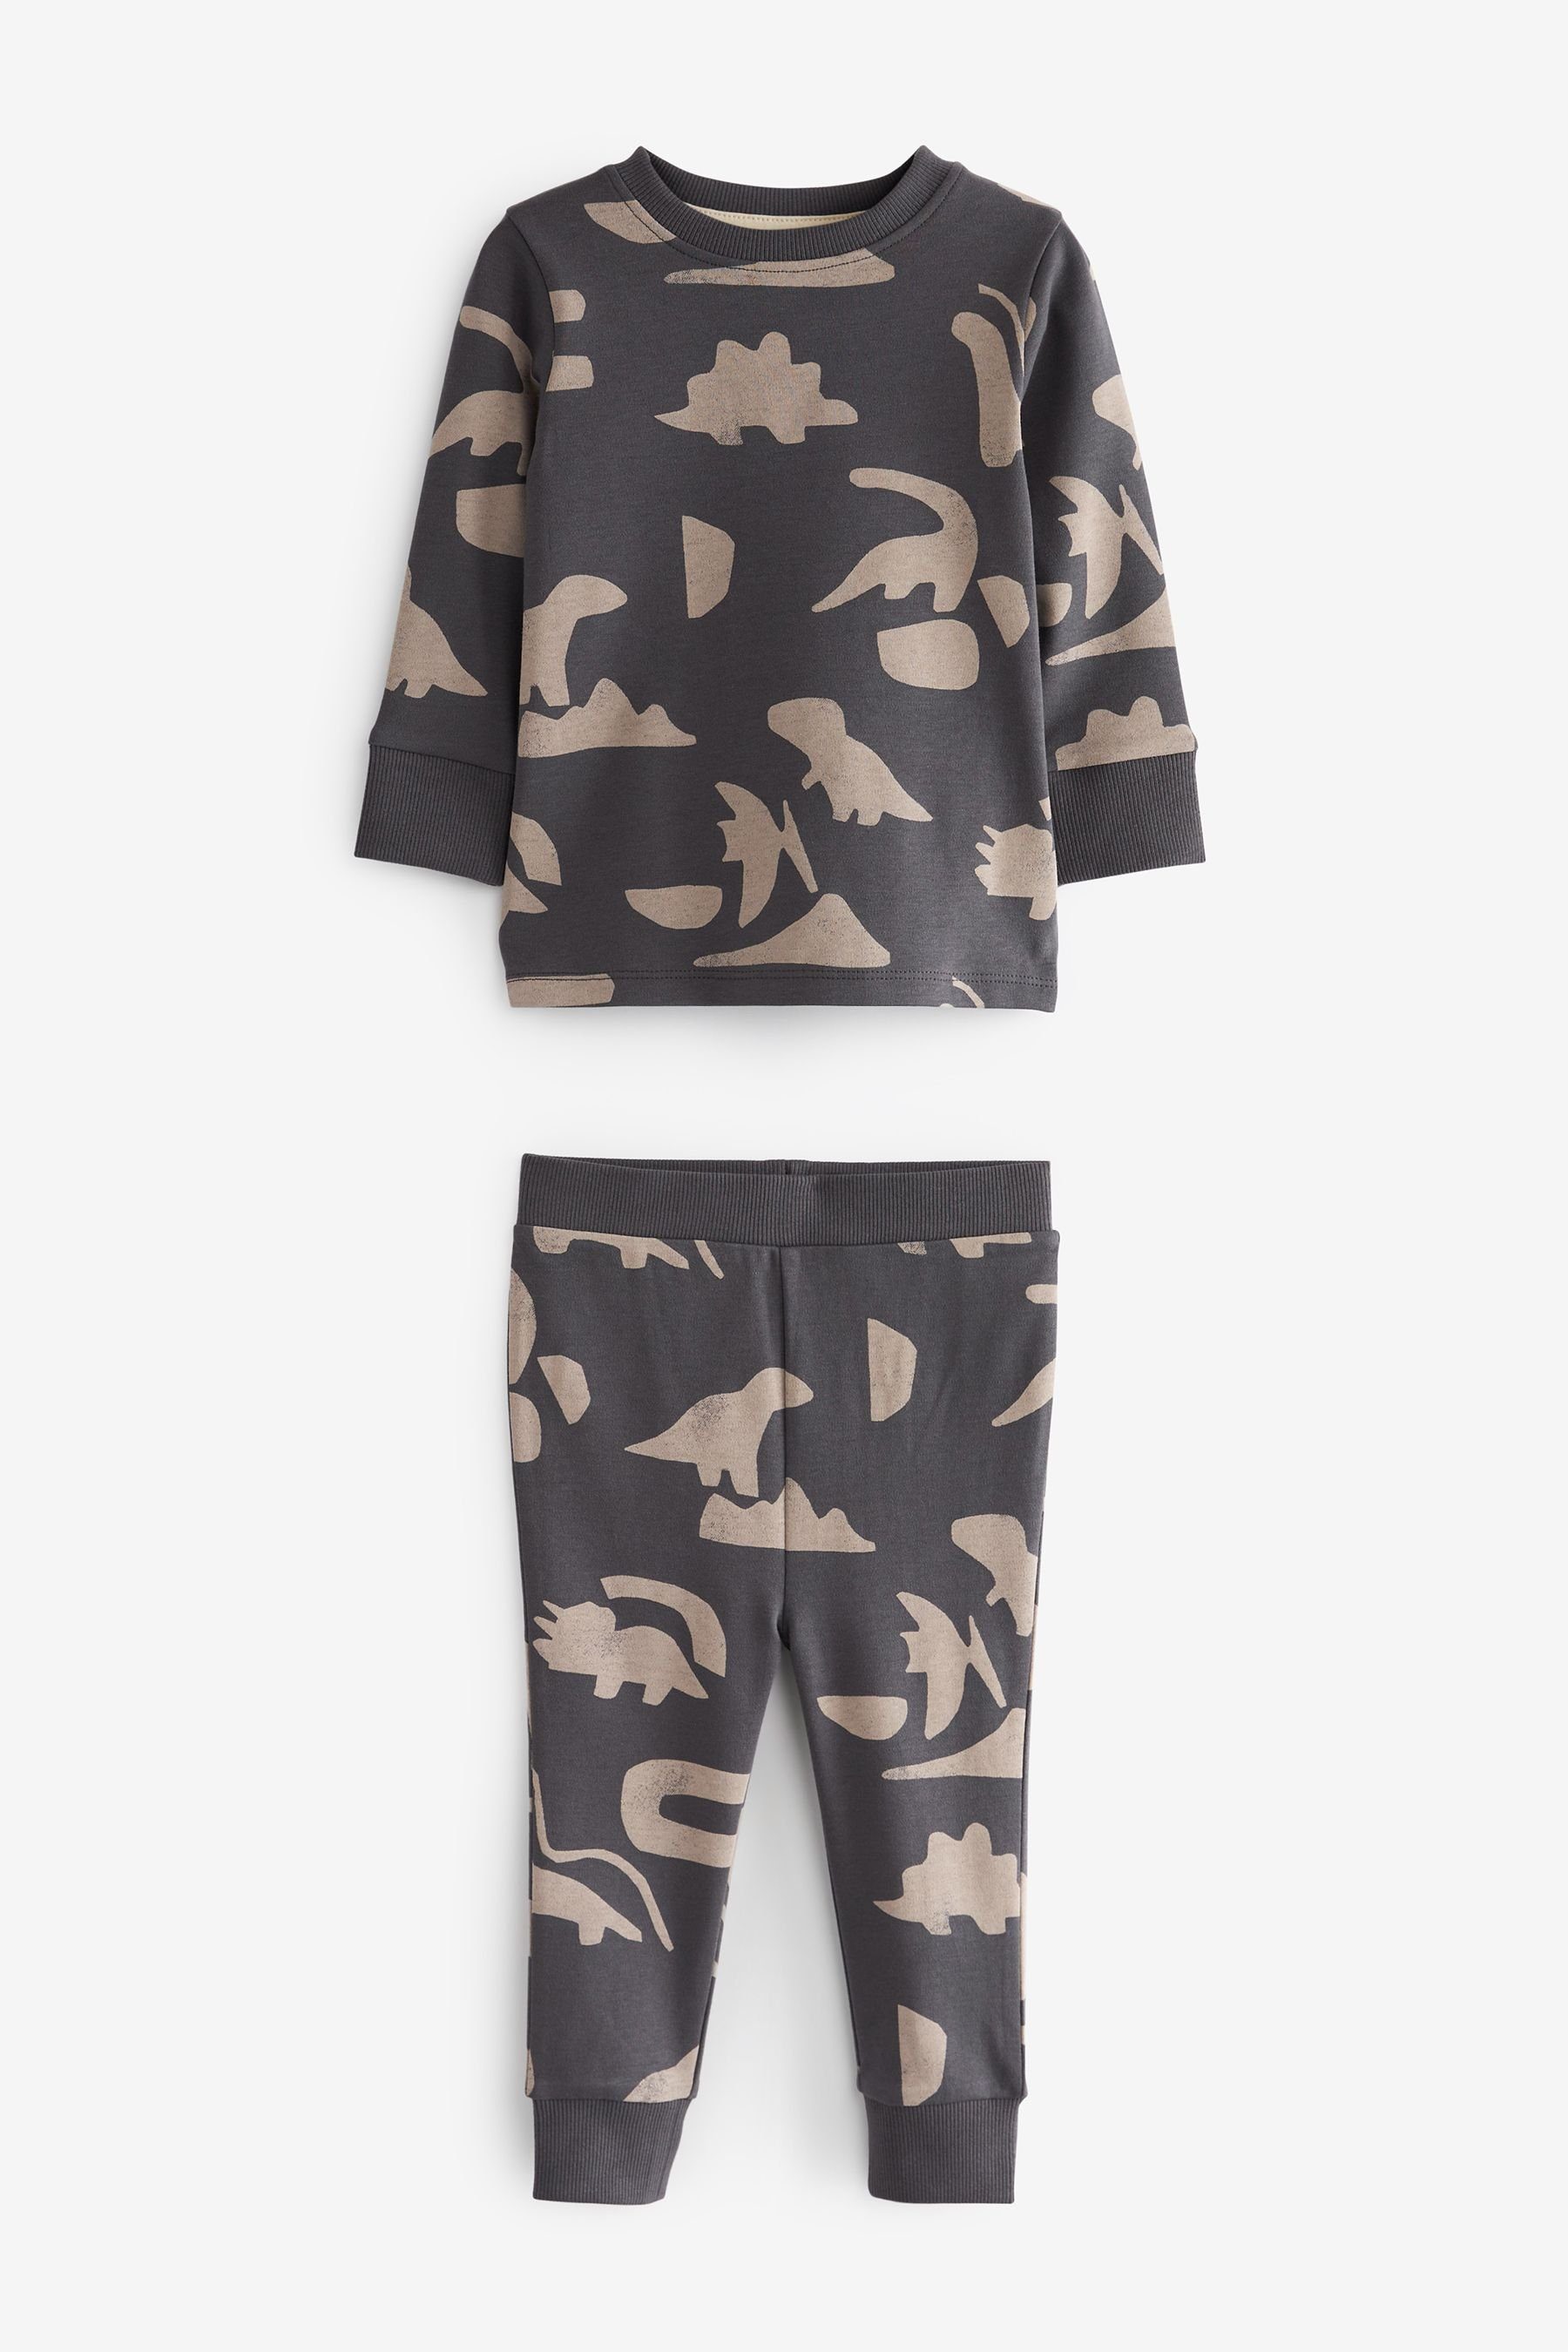 Next Pyjama Snuggle Neutral/Black Schlafanzüge (6 3er-Pack Dinosaur tlg)